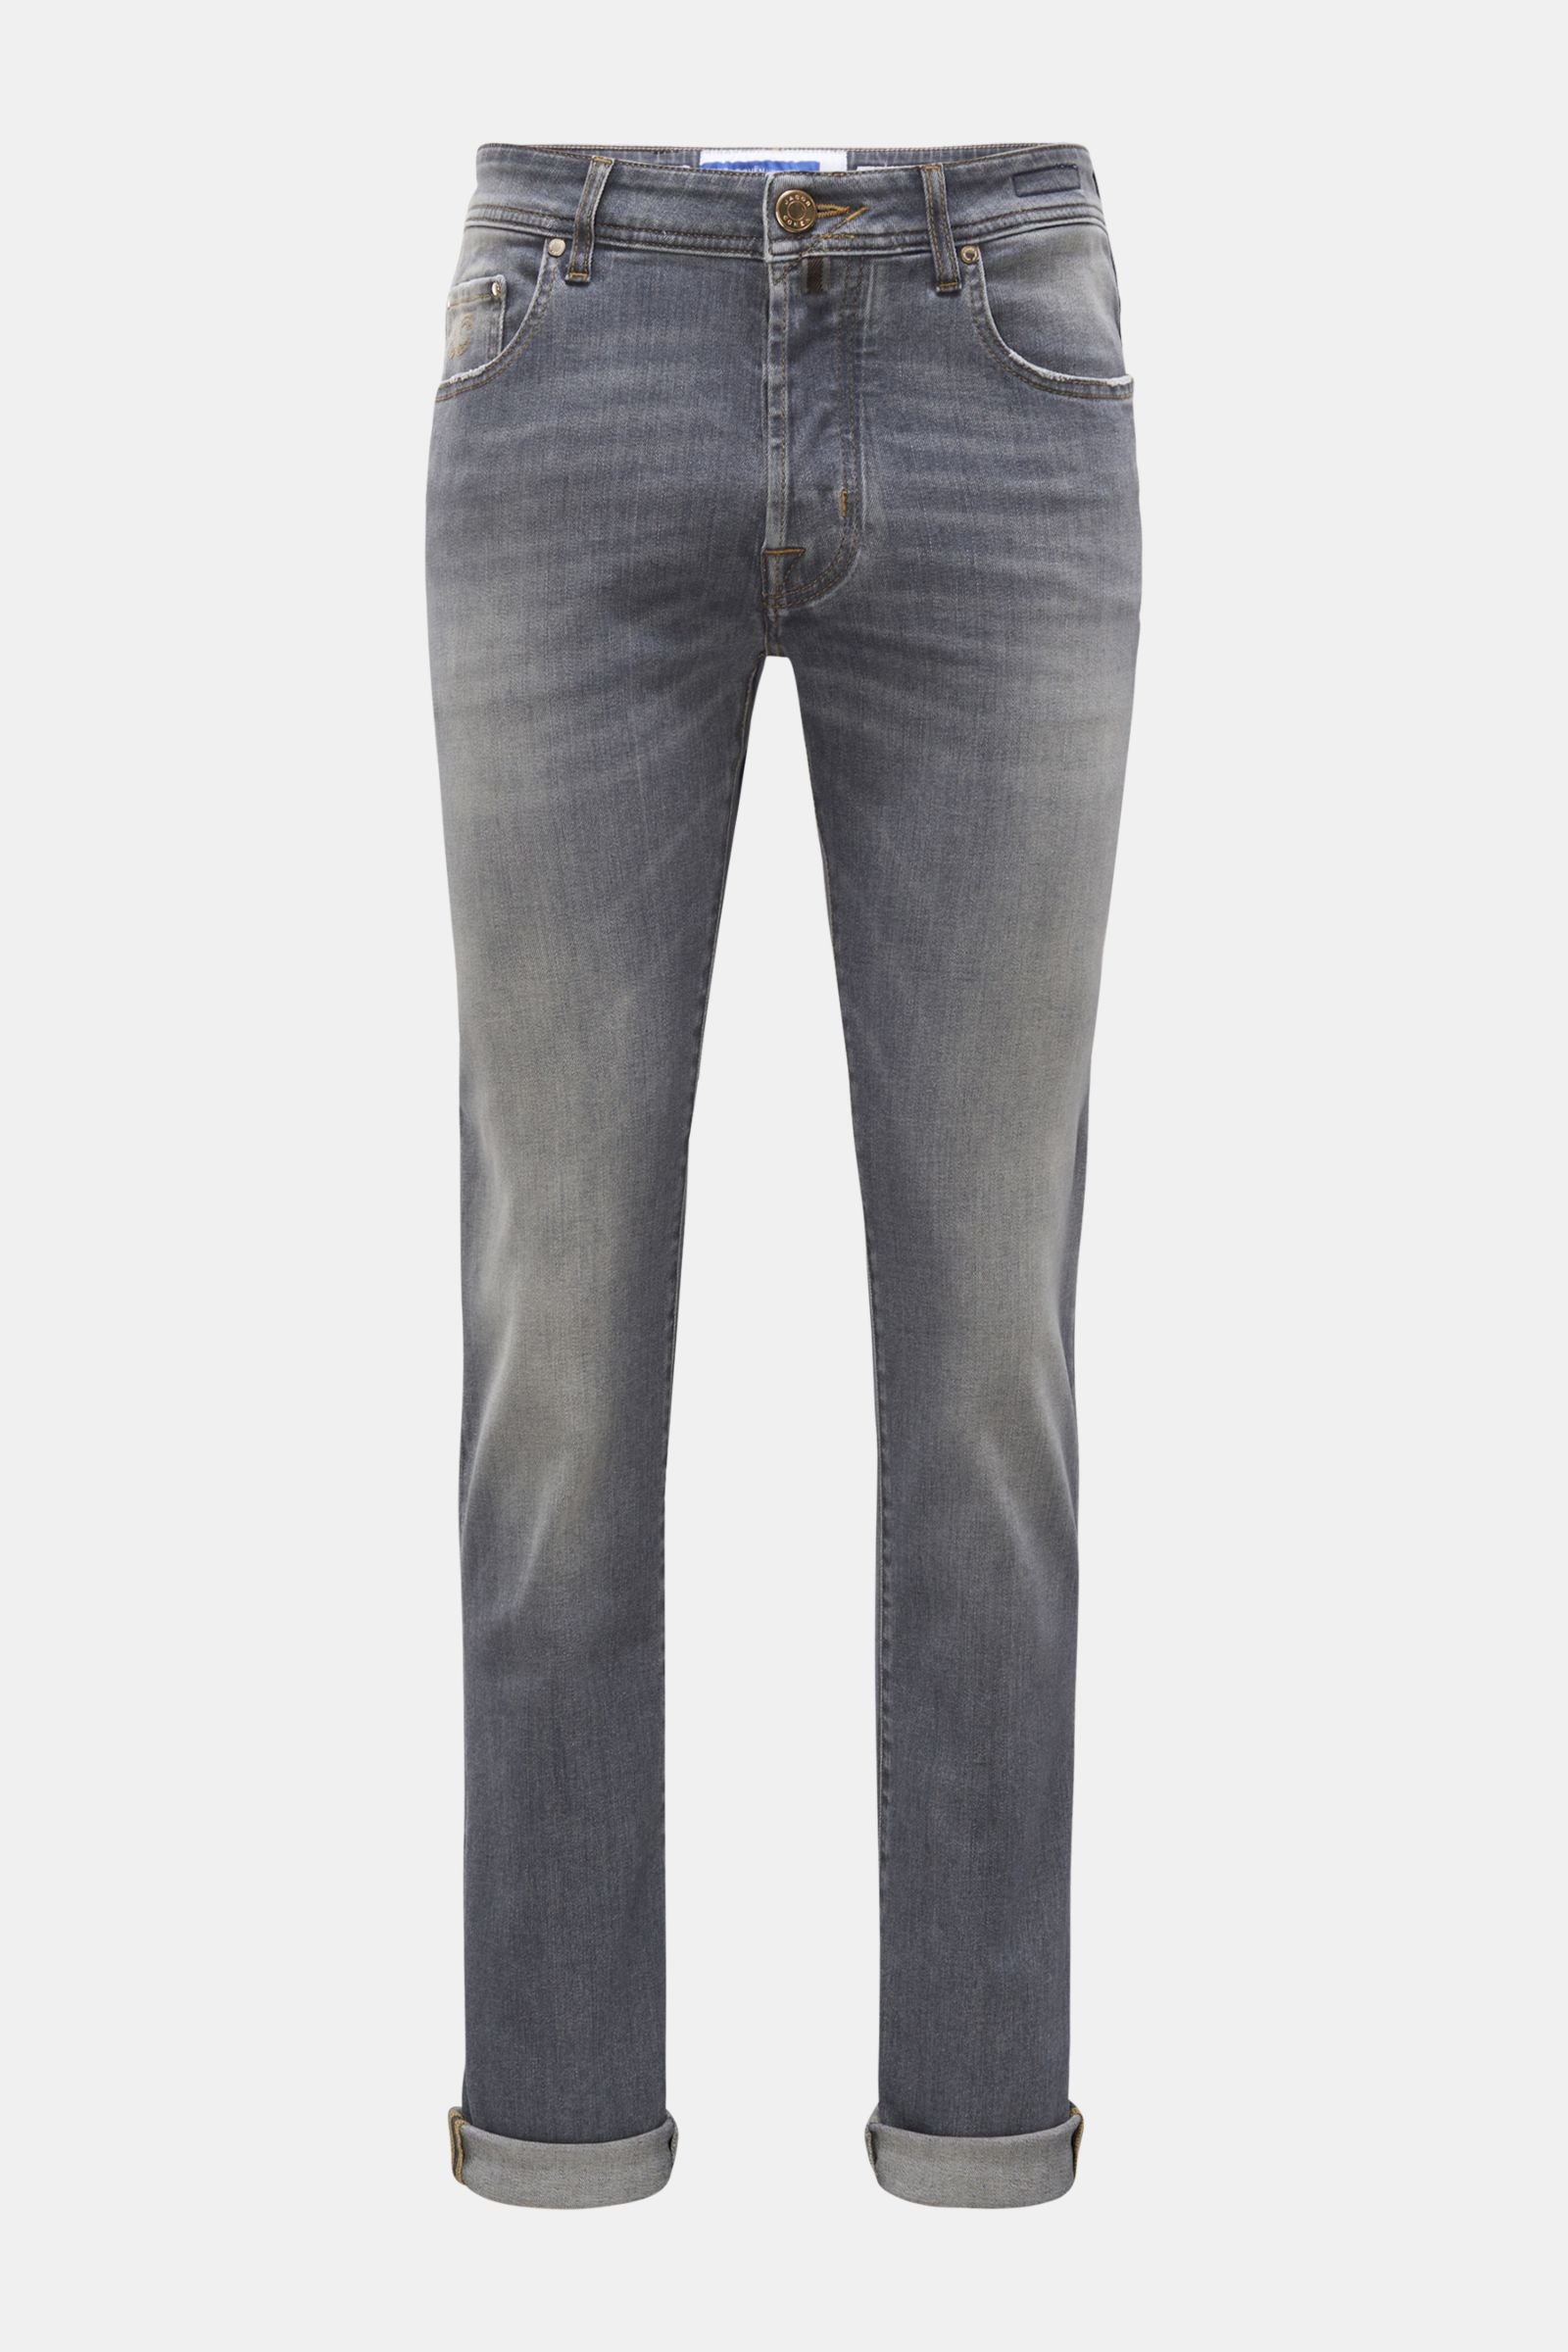 Jeans 'Bard' dark grey (formerly J688)